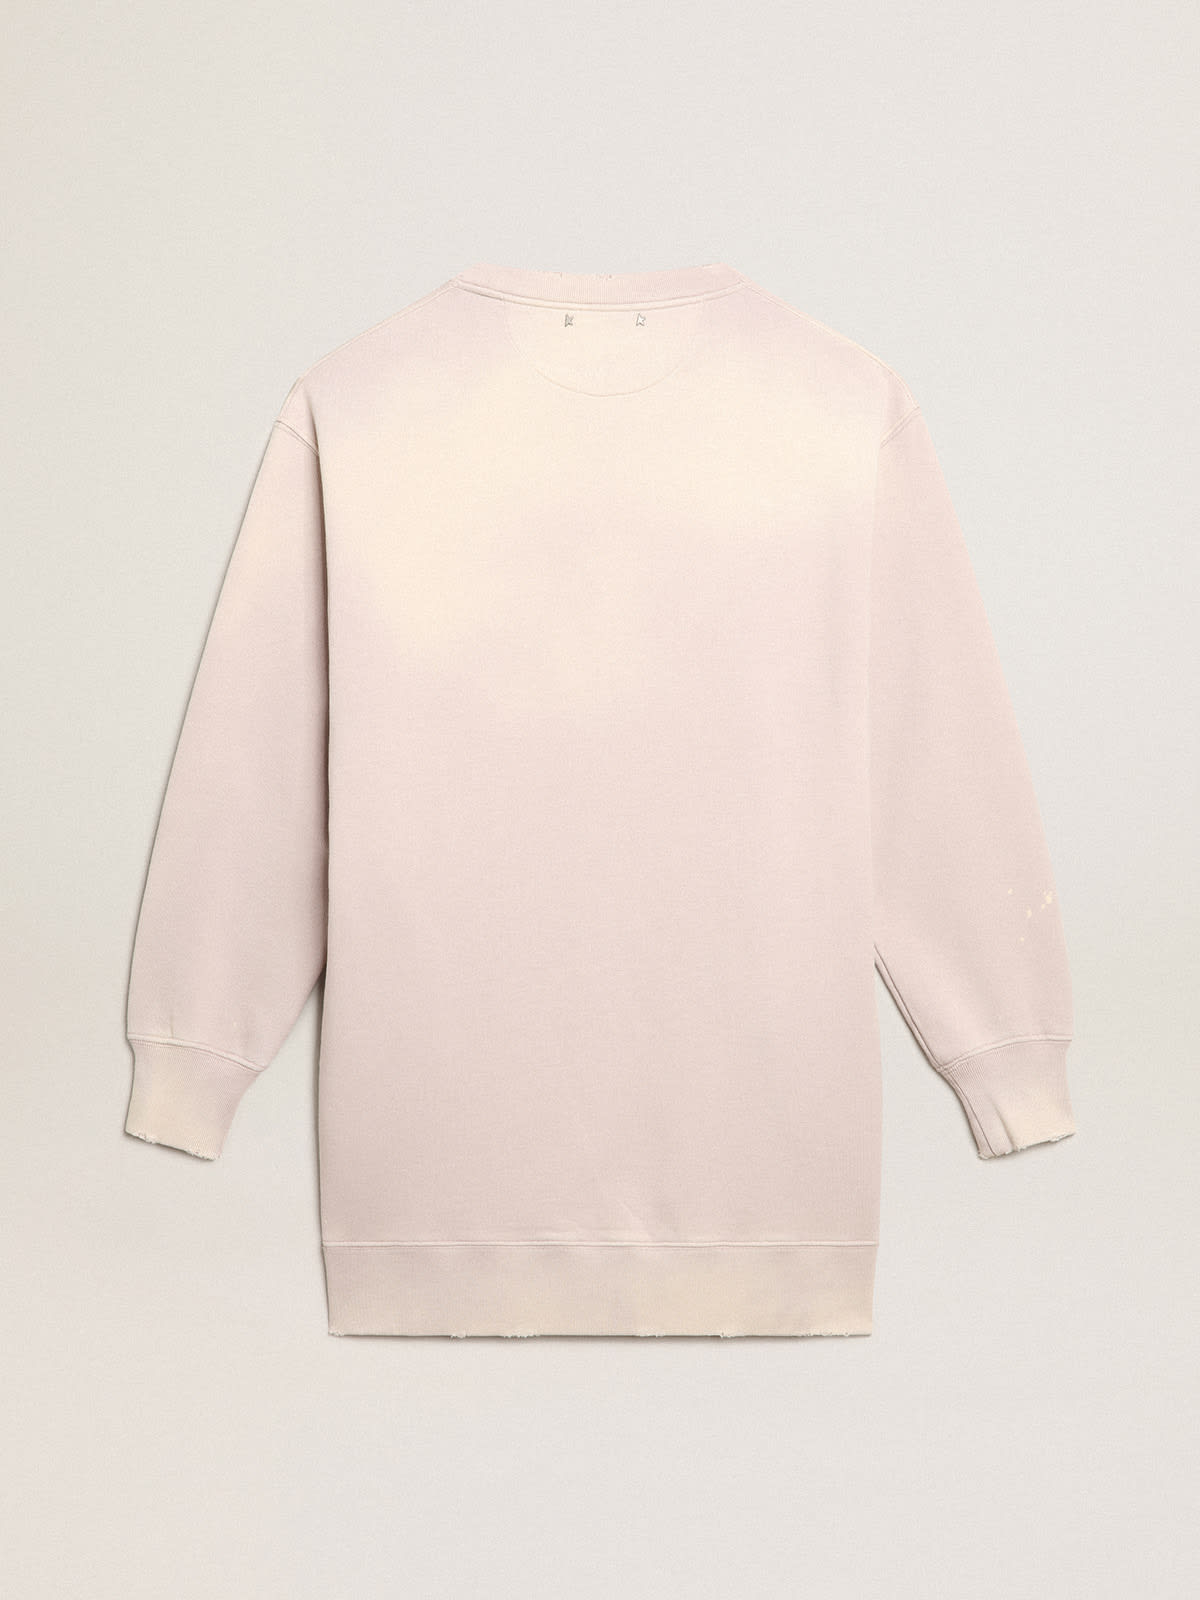 Golden Goose - Distressed-finish pale pink sweatshirt dress in 